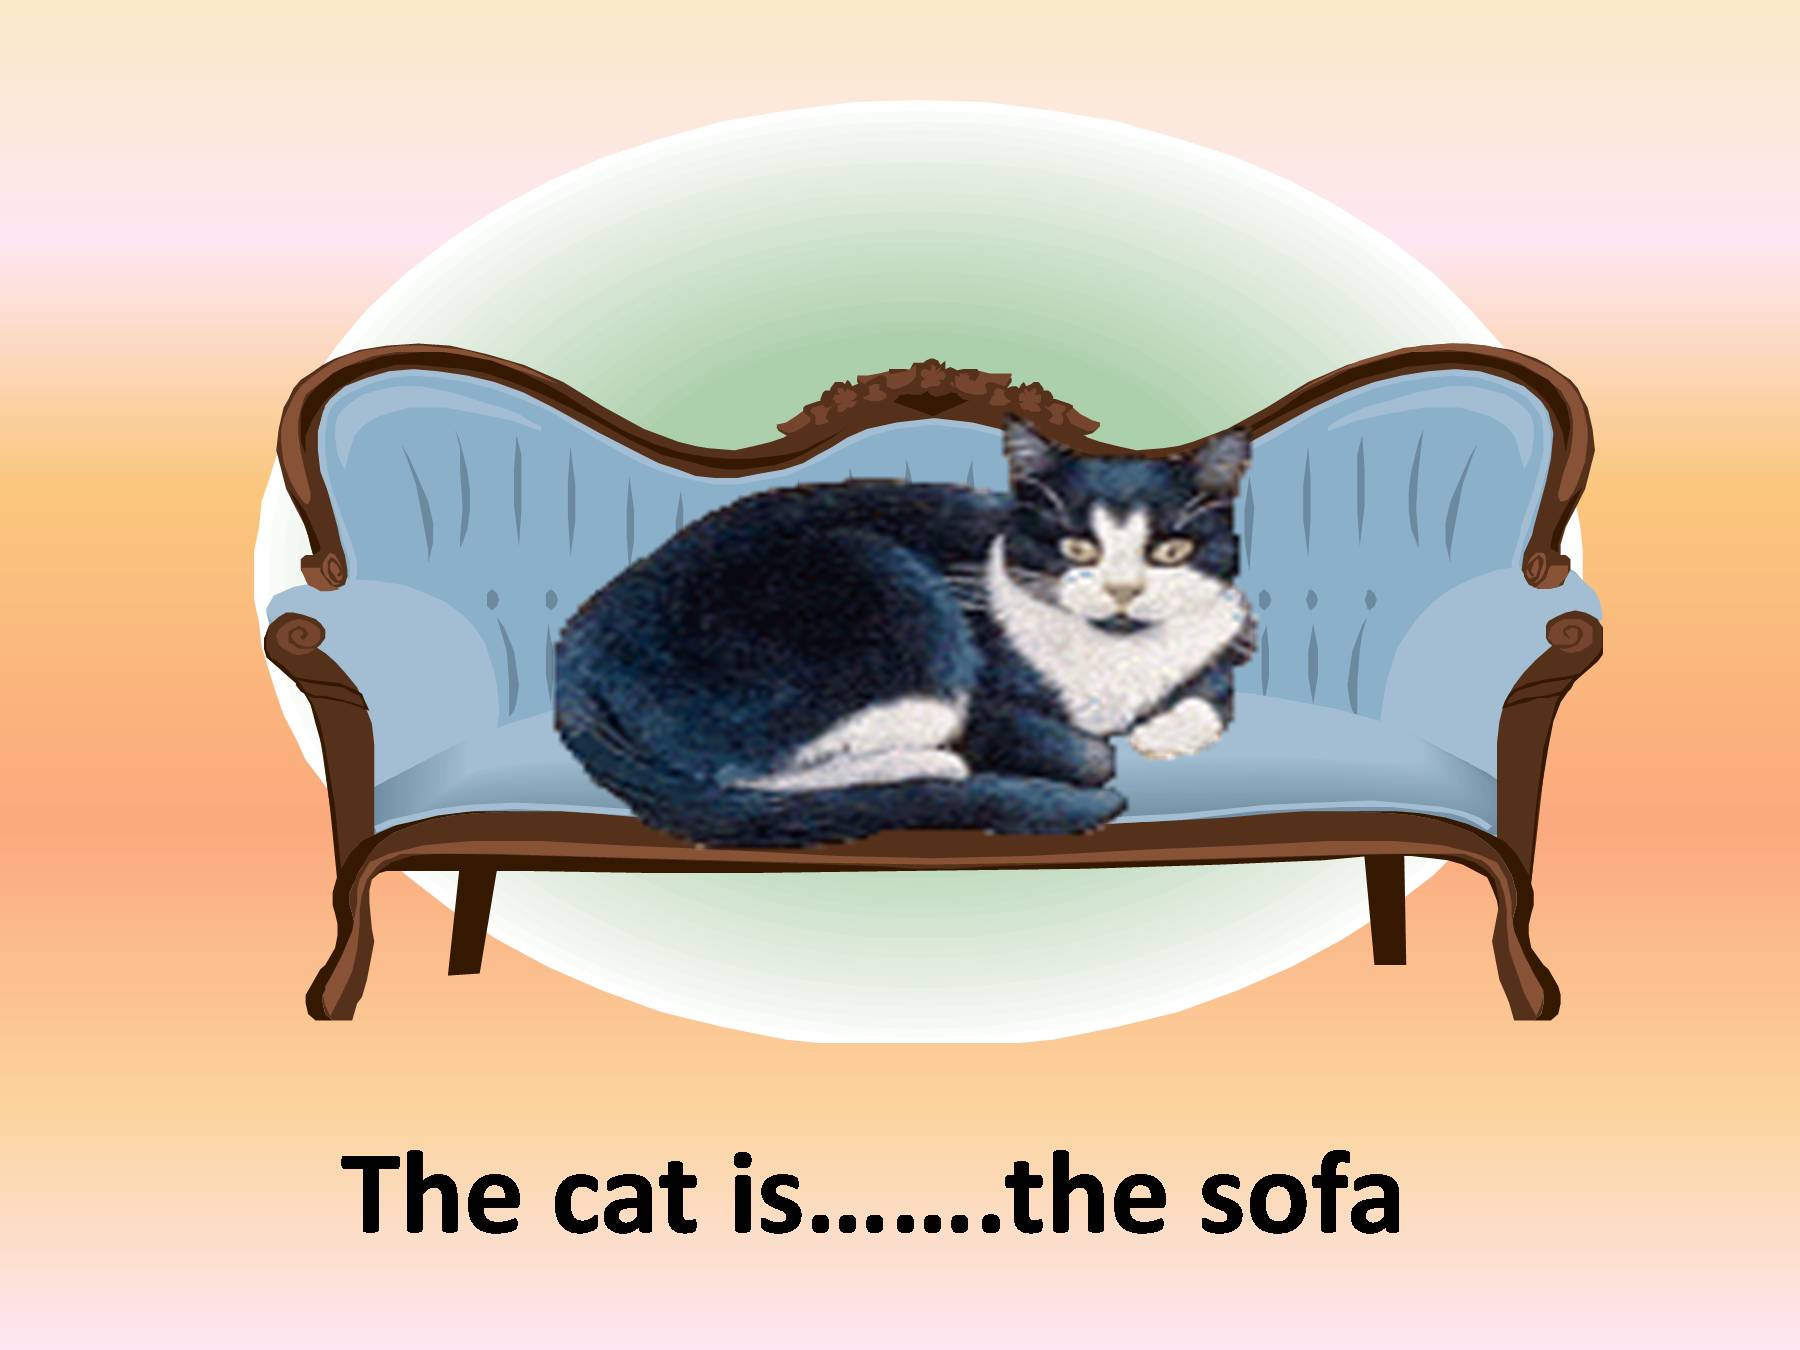 1 this is a cat. Cat on предлог. Предлоги в картинках. Cat is on the Sofa. Under картинка.